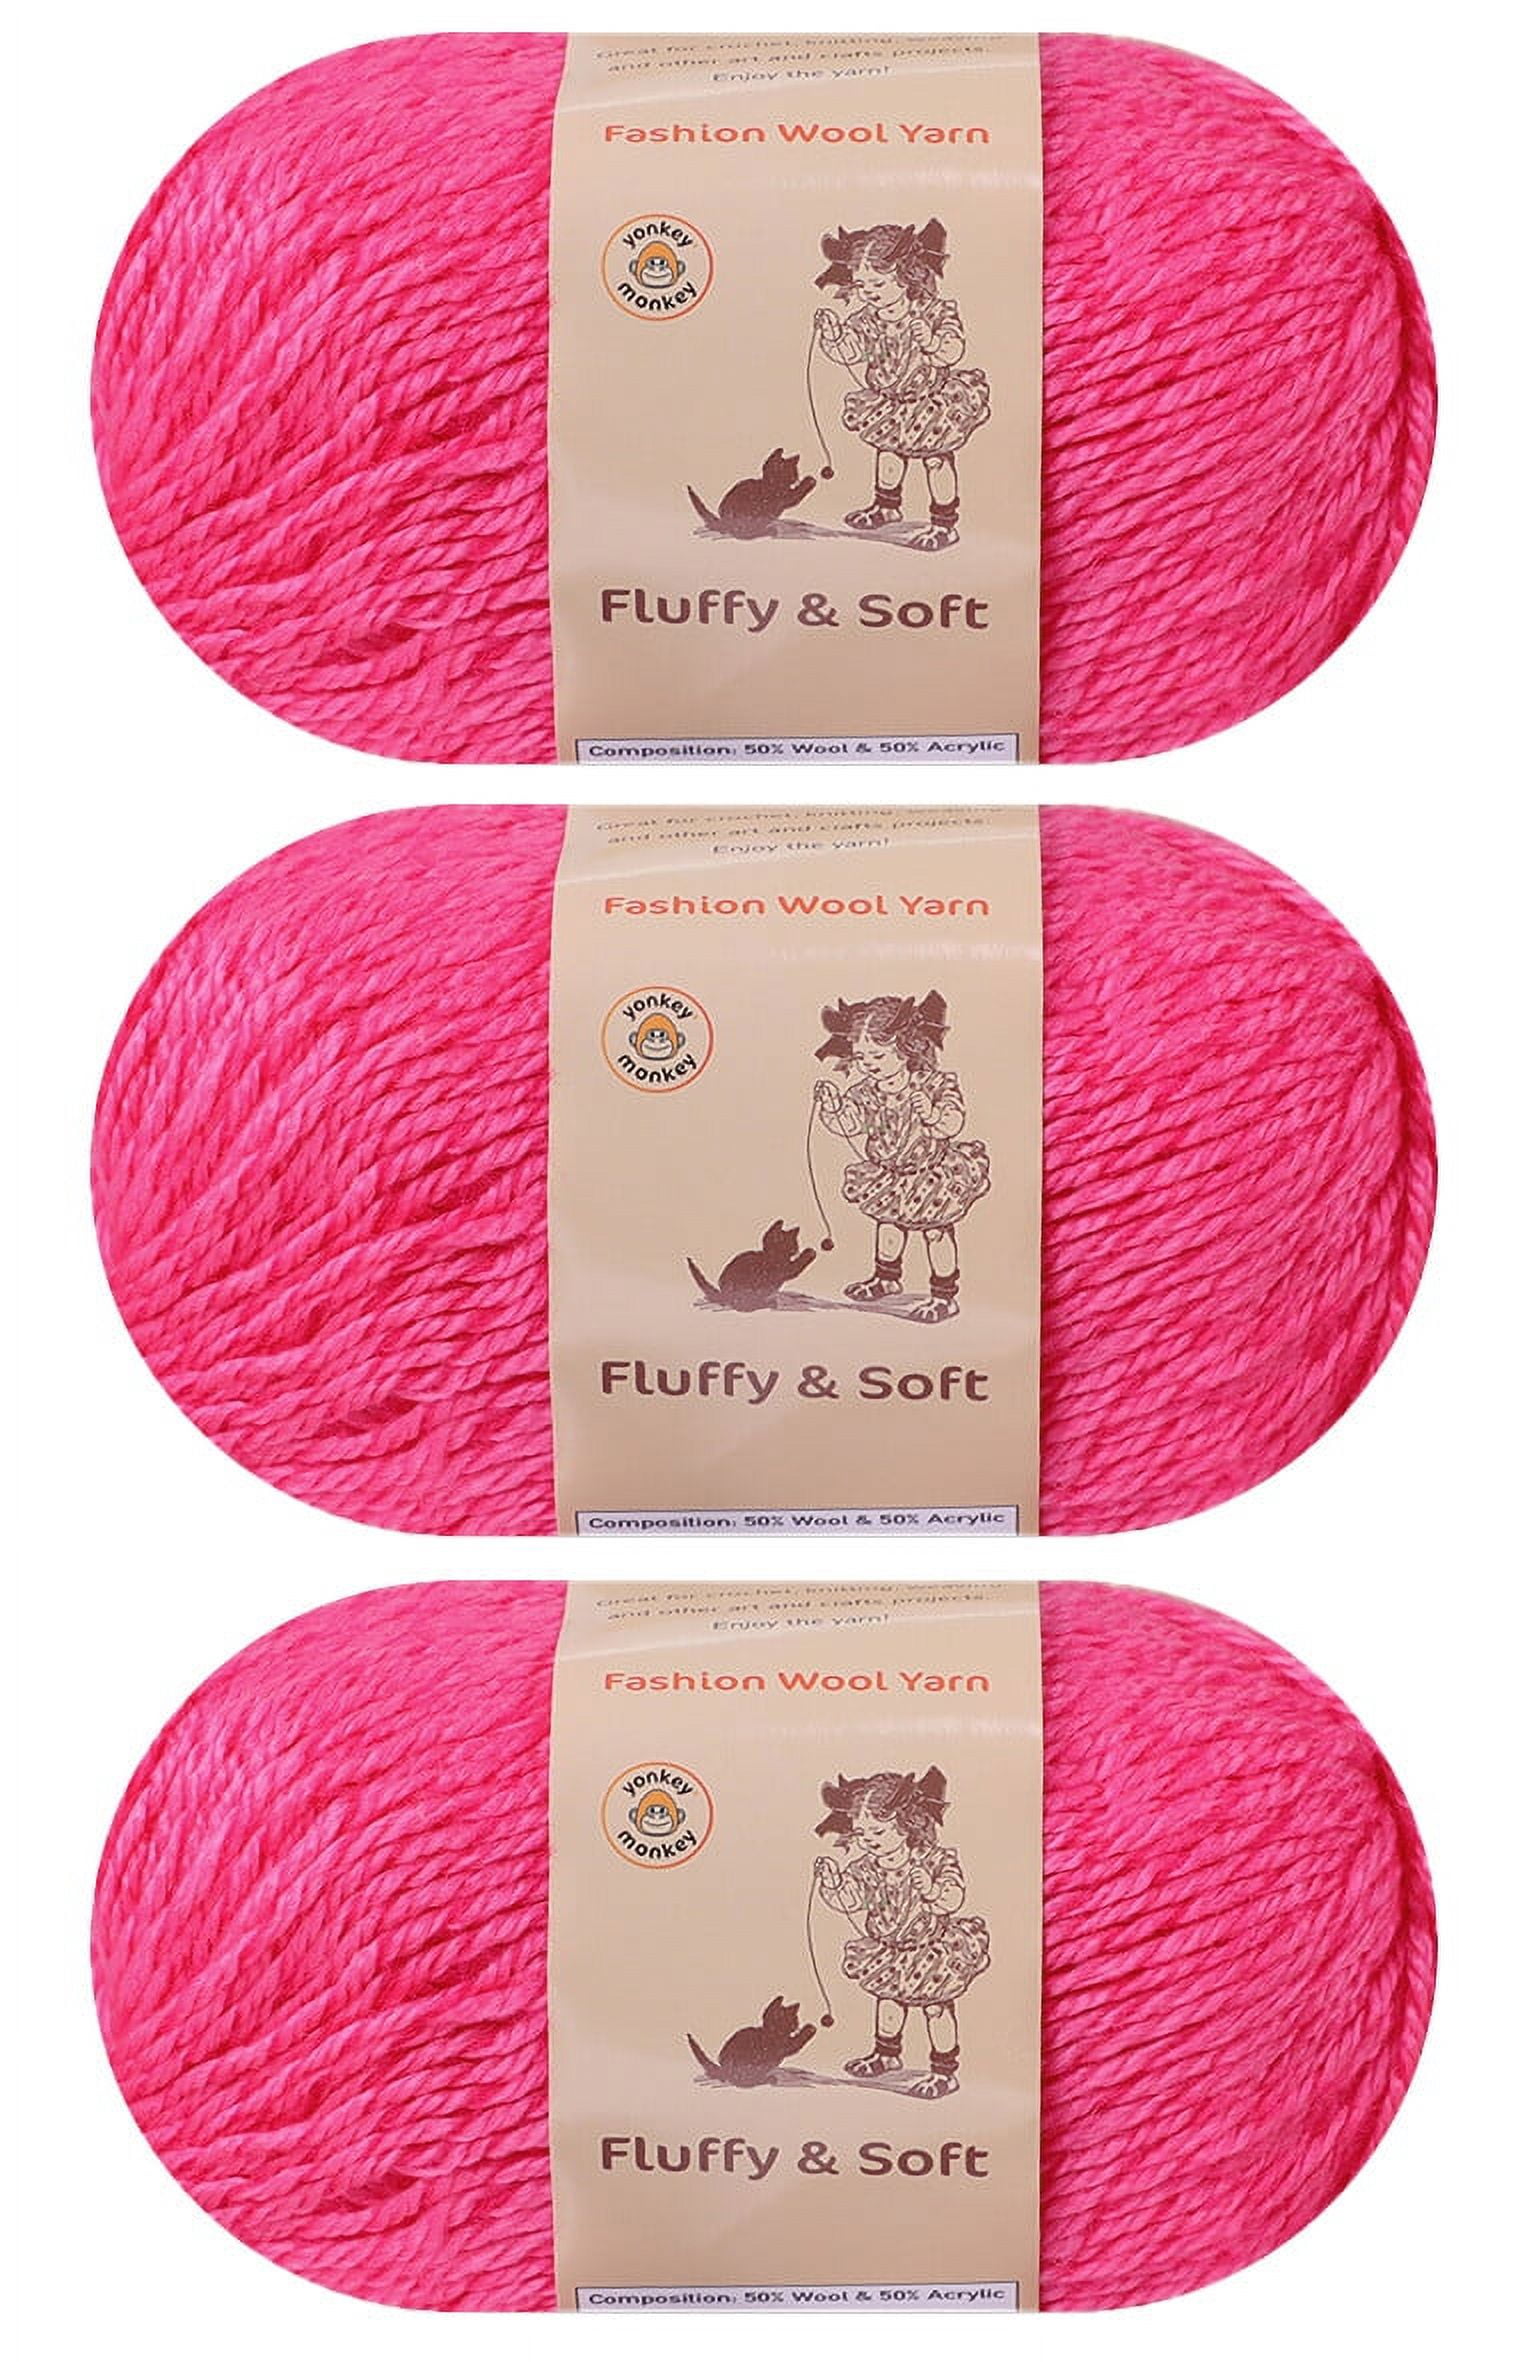 50% Wool Yarn for Crocheting,Thick Yarn for Crocheting,Crochet Yarn for  Crocheting,Yarn for Crafts,Crochet Yarn for Sweater,Scarf,Hat(Black)